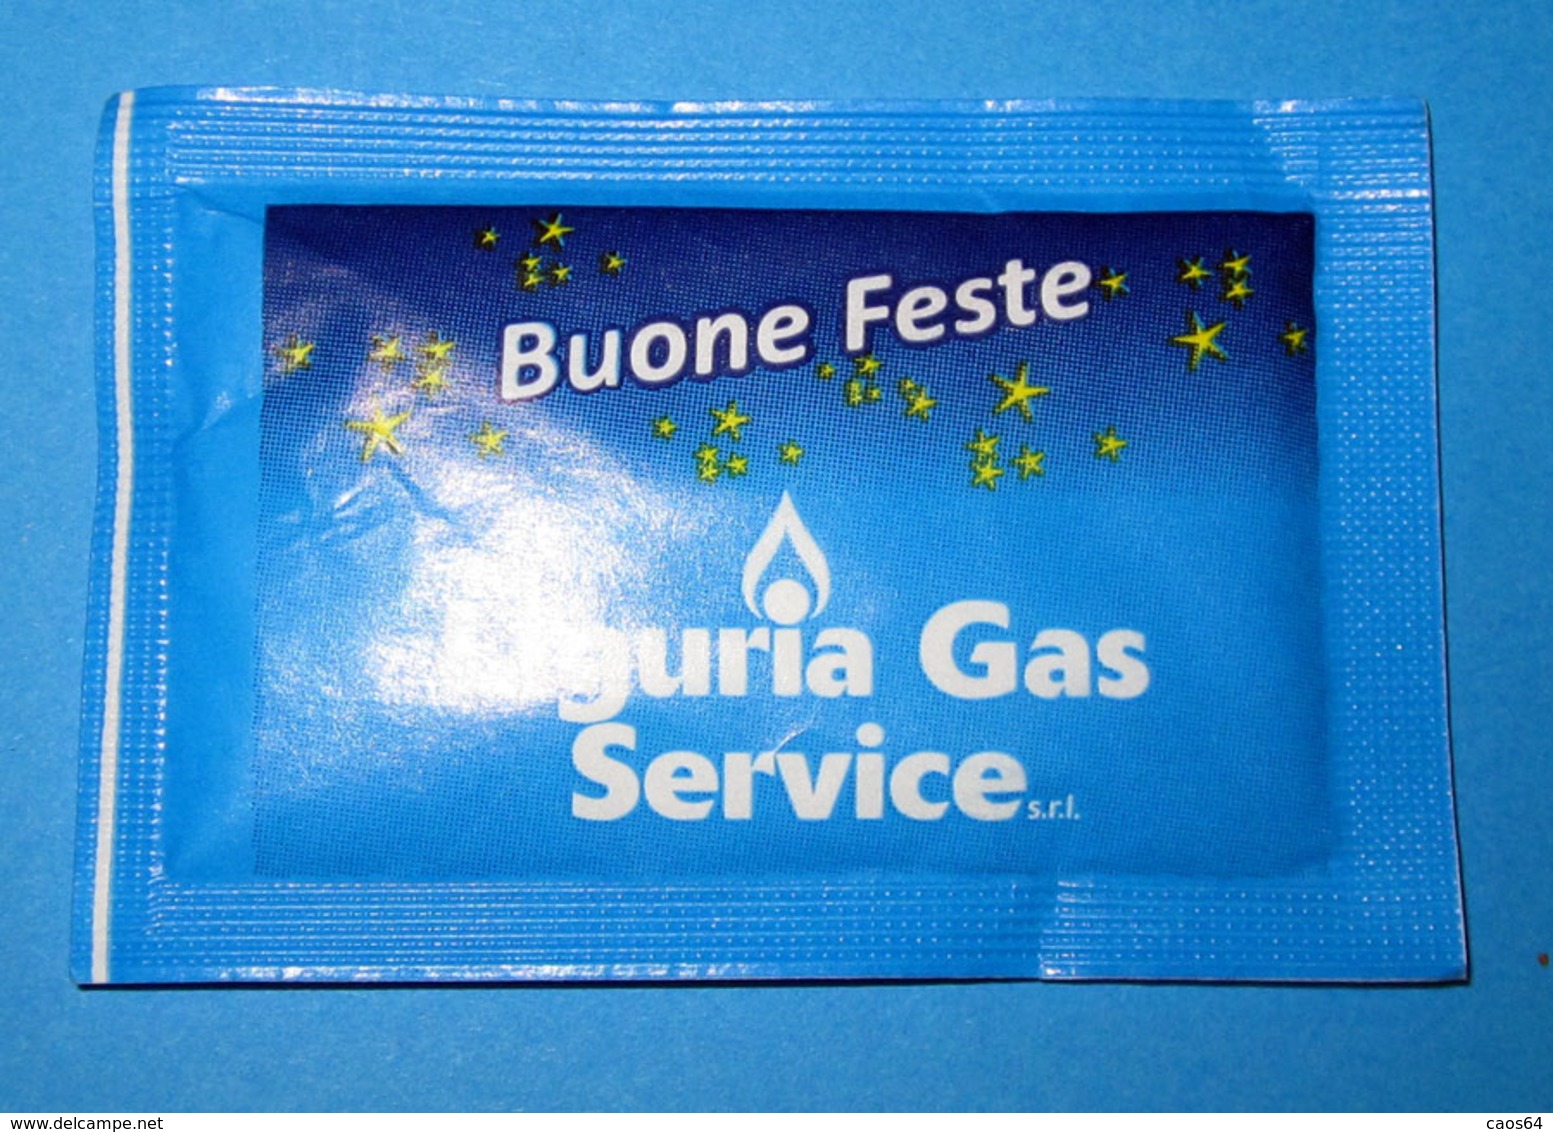 LIGURIA GAS SERVICE Acqui Terme (AL) BUONE FESTE BUSTINA DI ZUCCHERO PIENA - Zucchero (bustine)